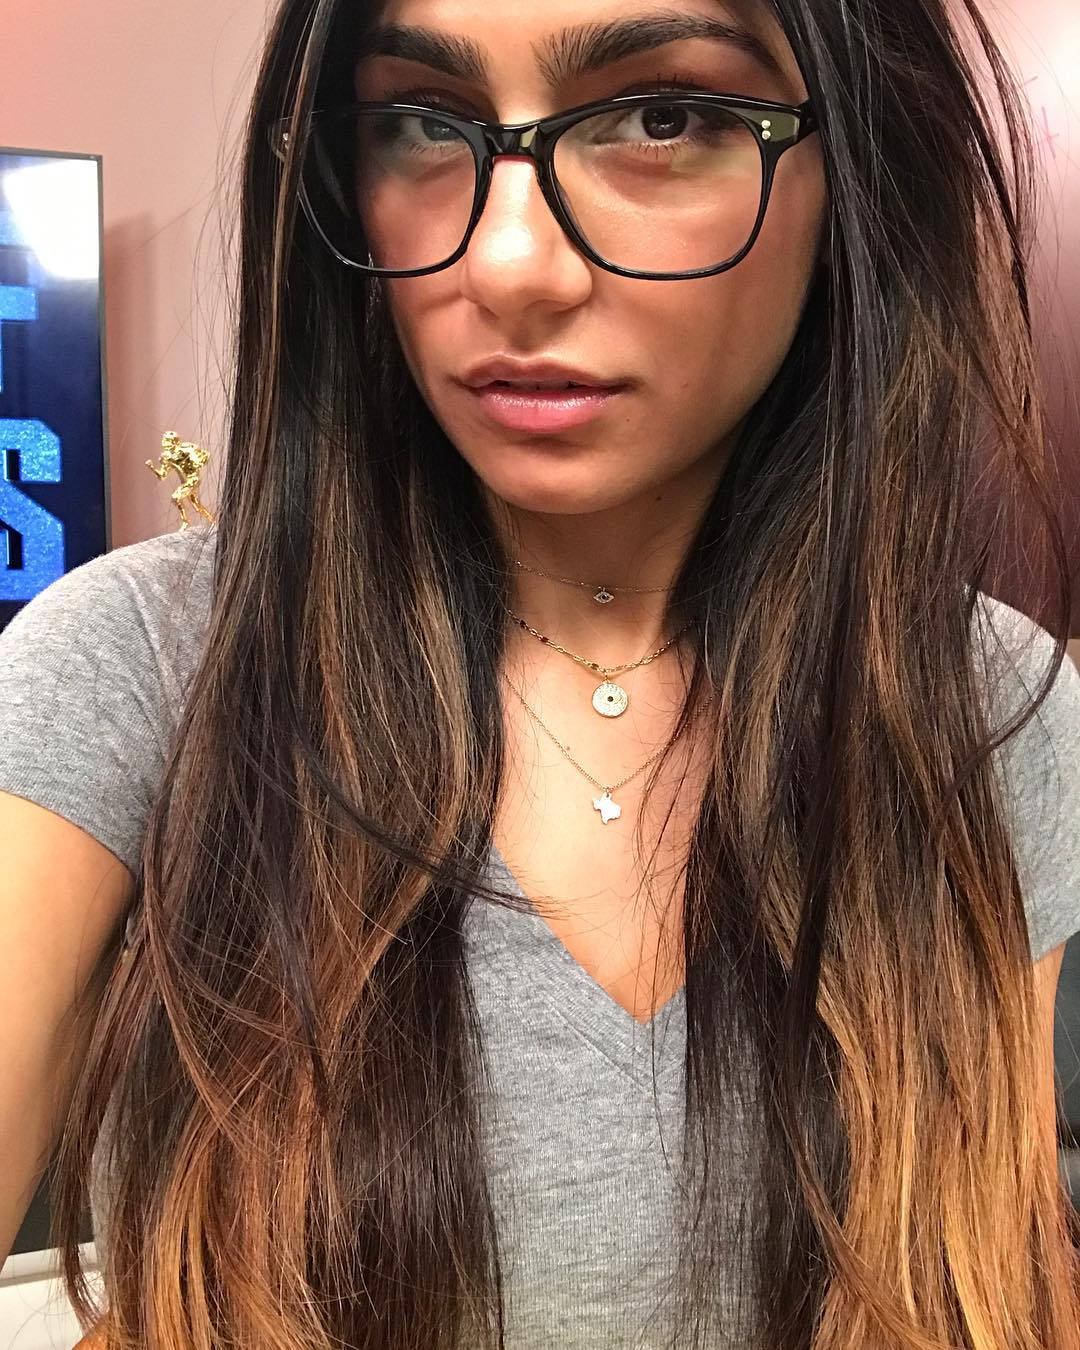 Mia Khalifa Glowing In Reflection: Eyeglass Selfie Background